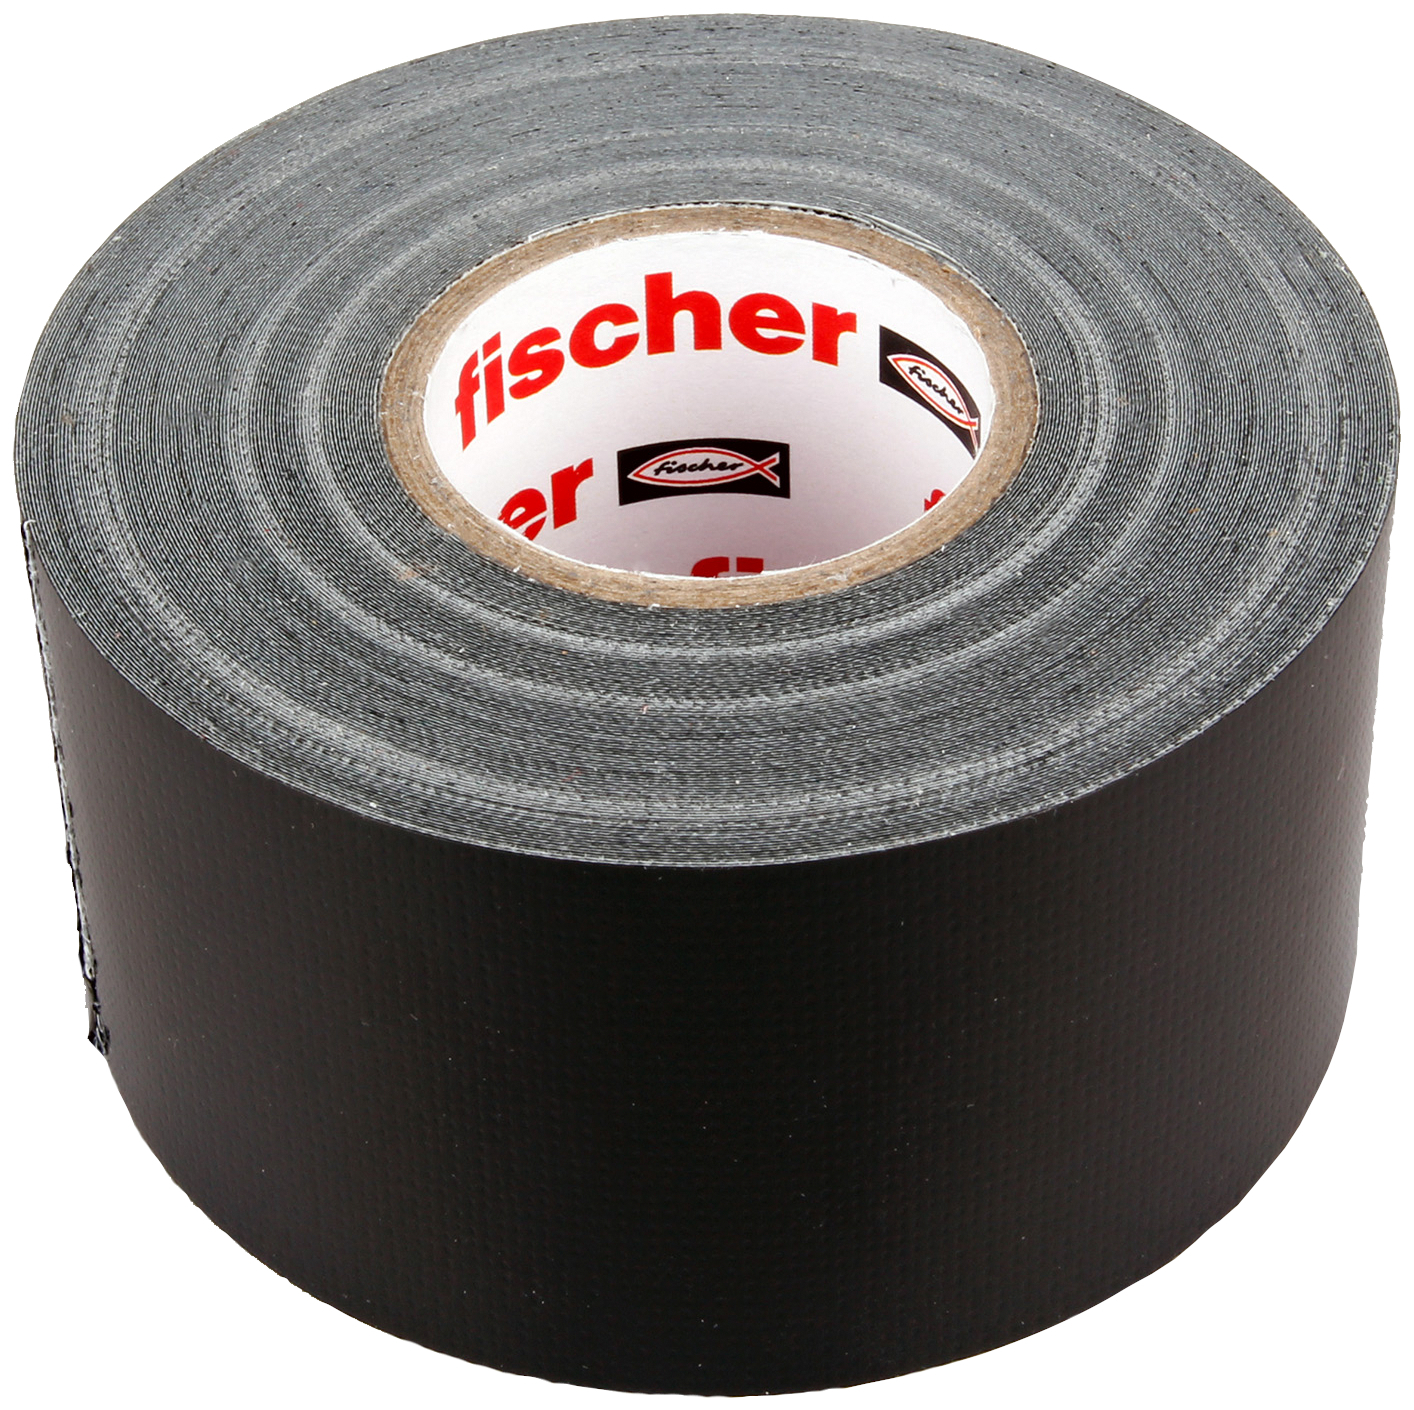 fischer Universal Tape Strong (1 Pz.) Nastro adesivo telato extra resistente..